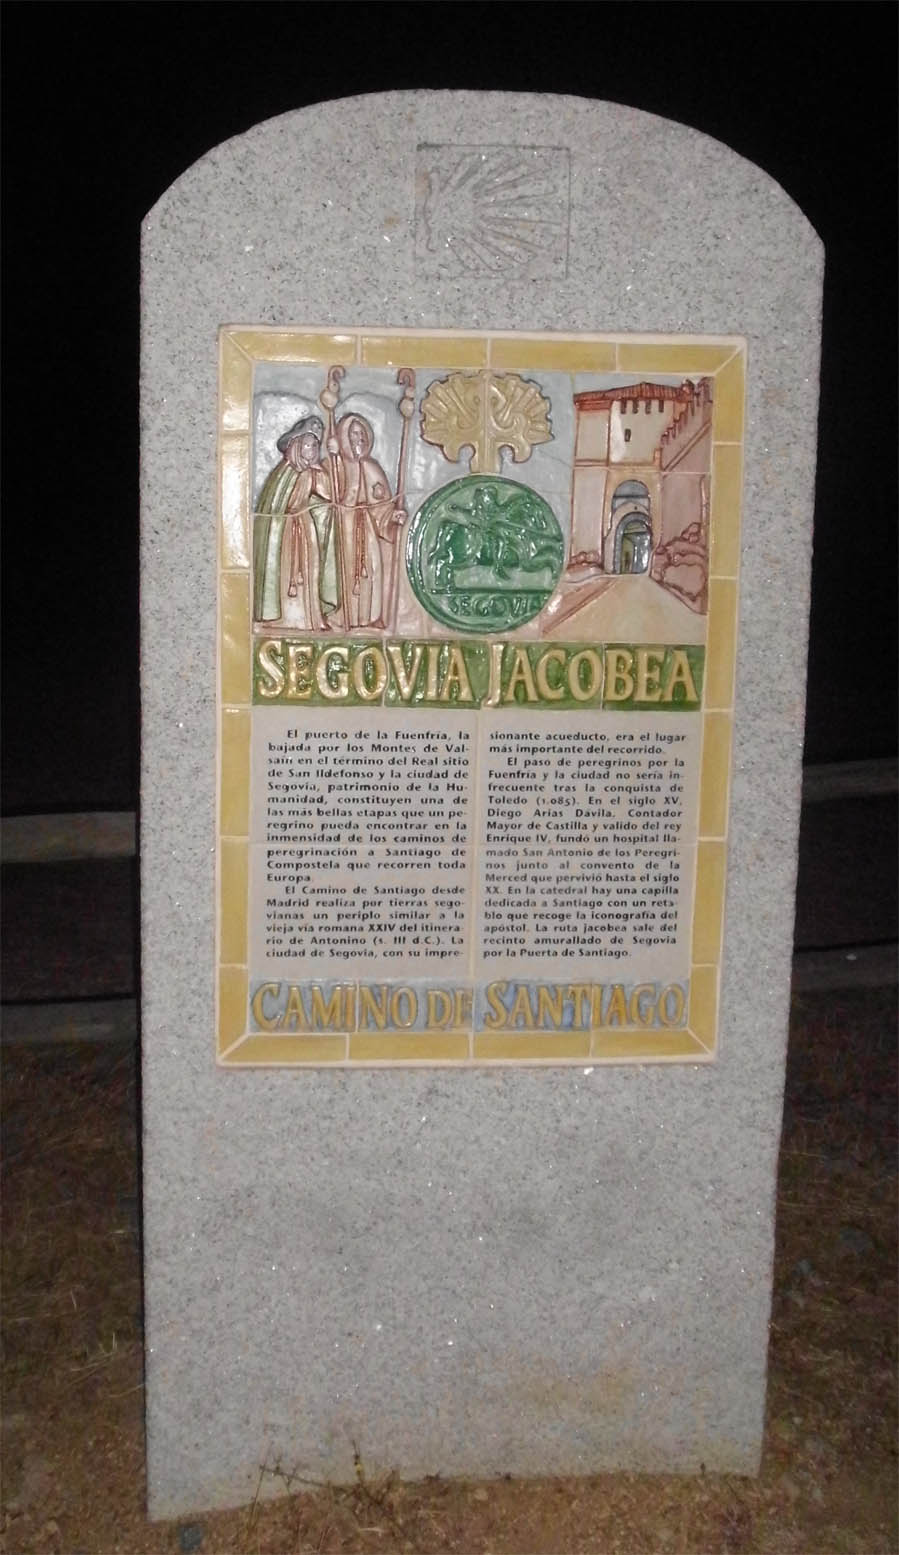 Segovia Jacobea - www.jakob-beckeling.net